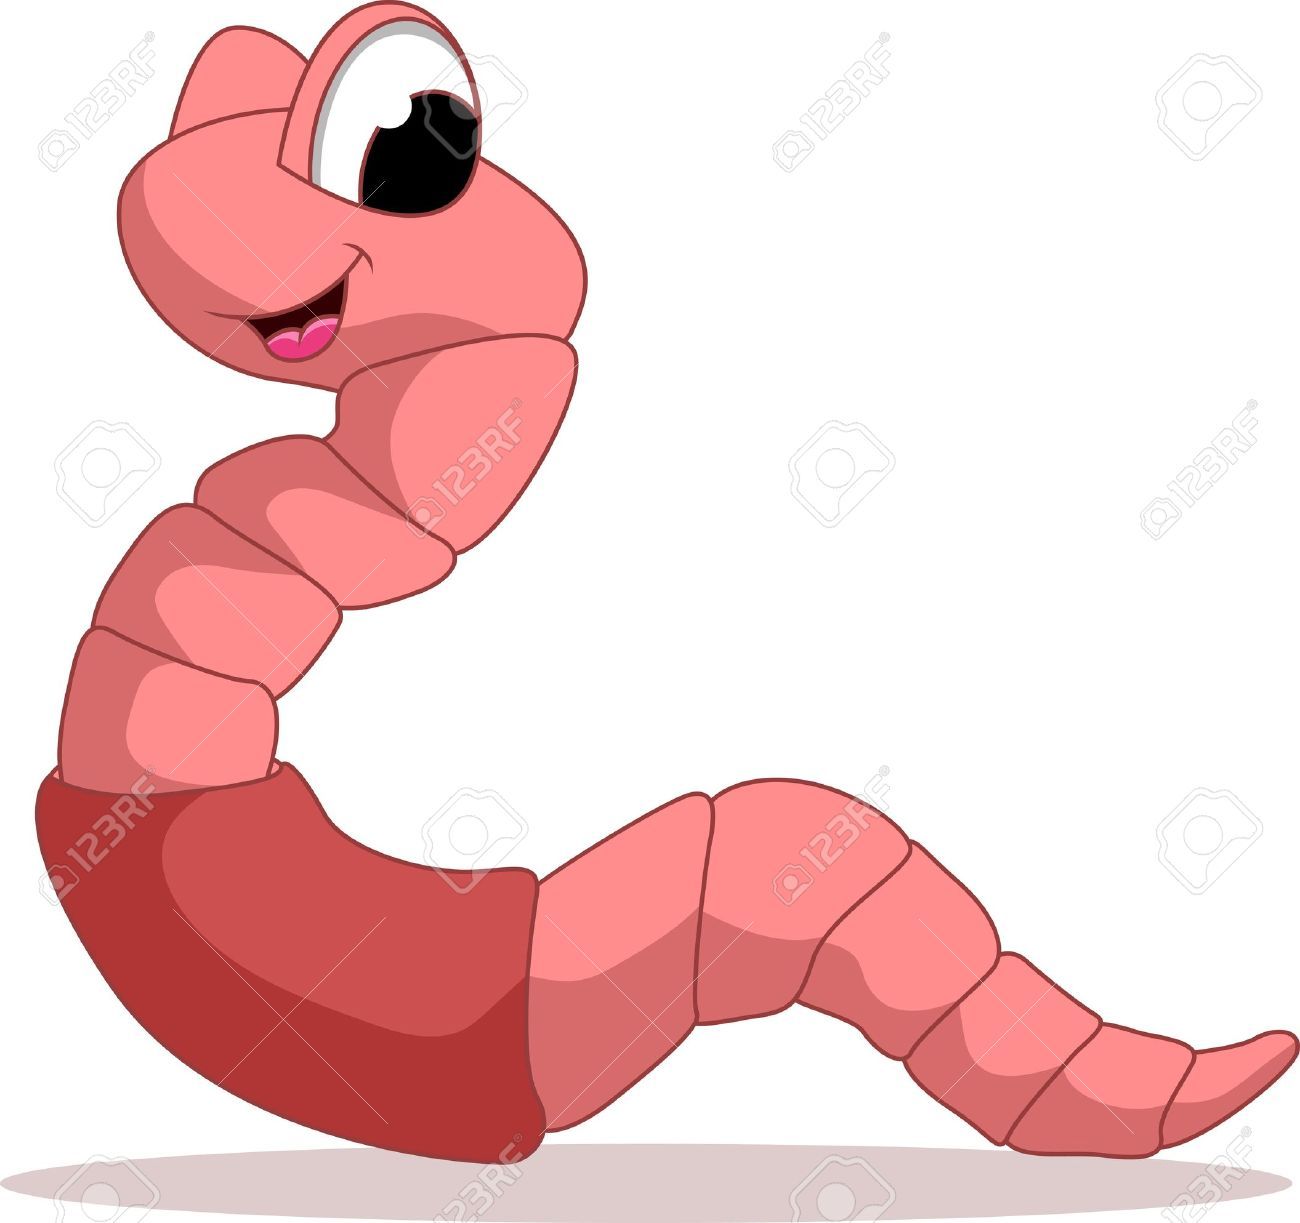 Worm clipart. Earthworm stock vector illustration